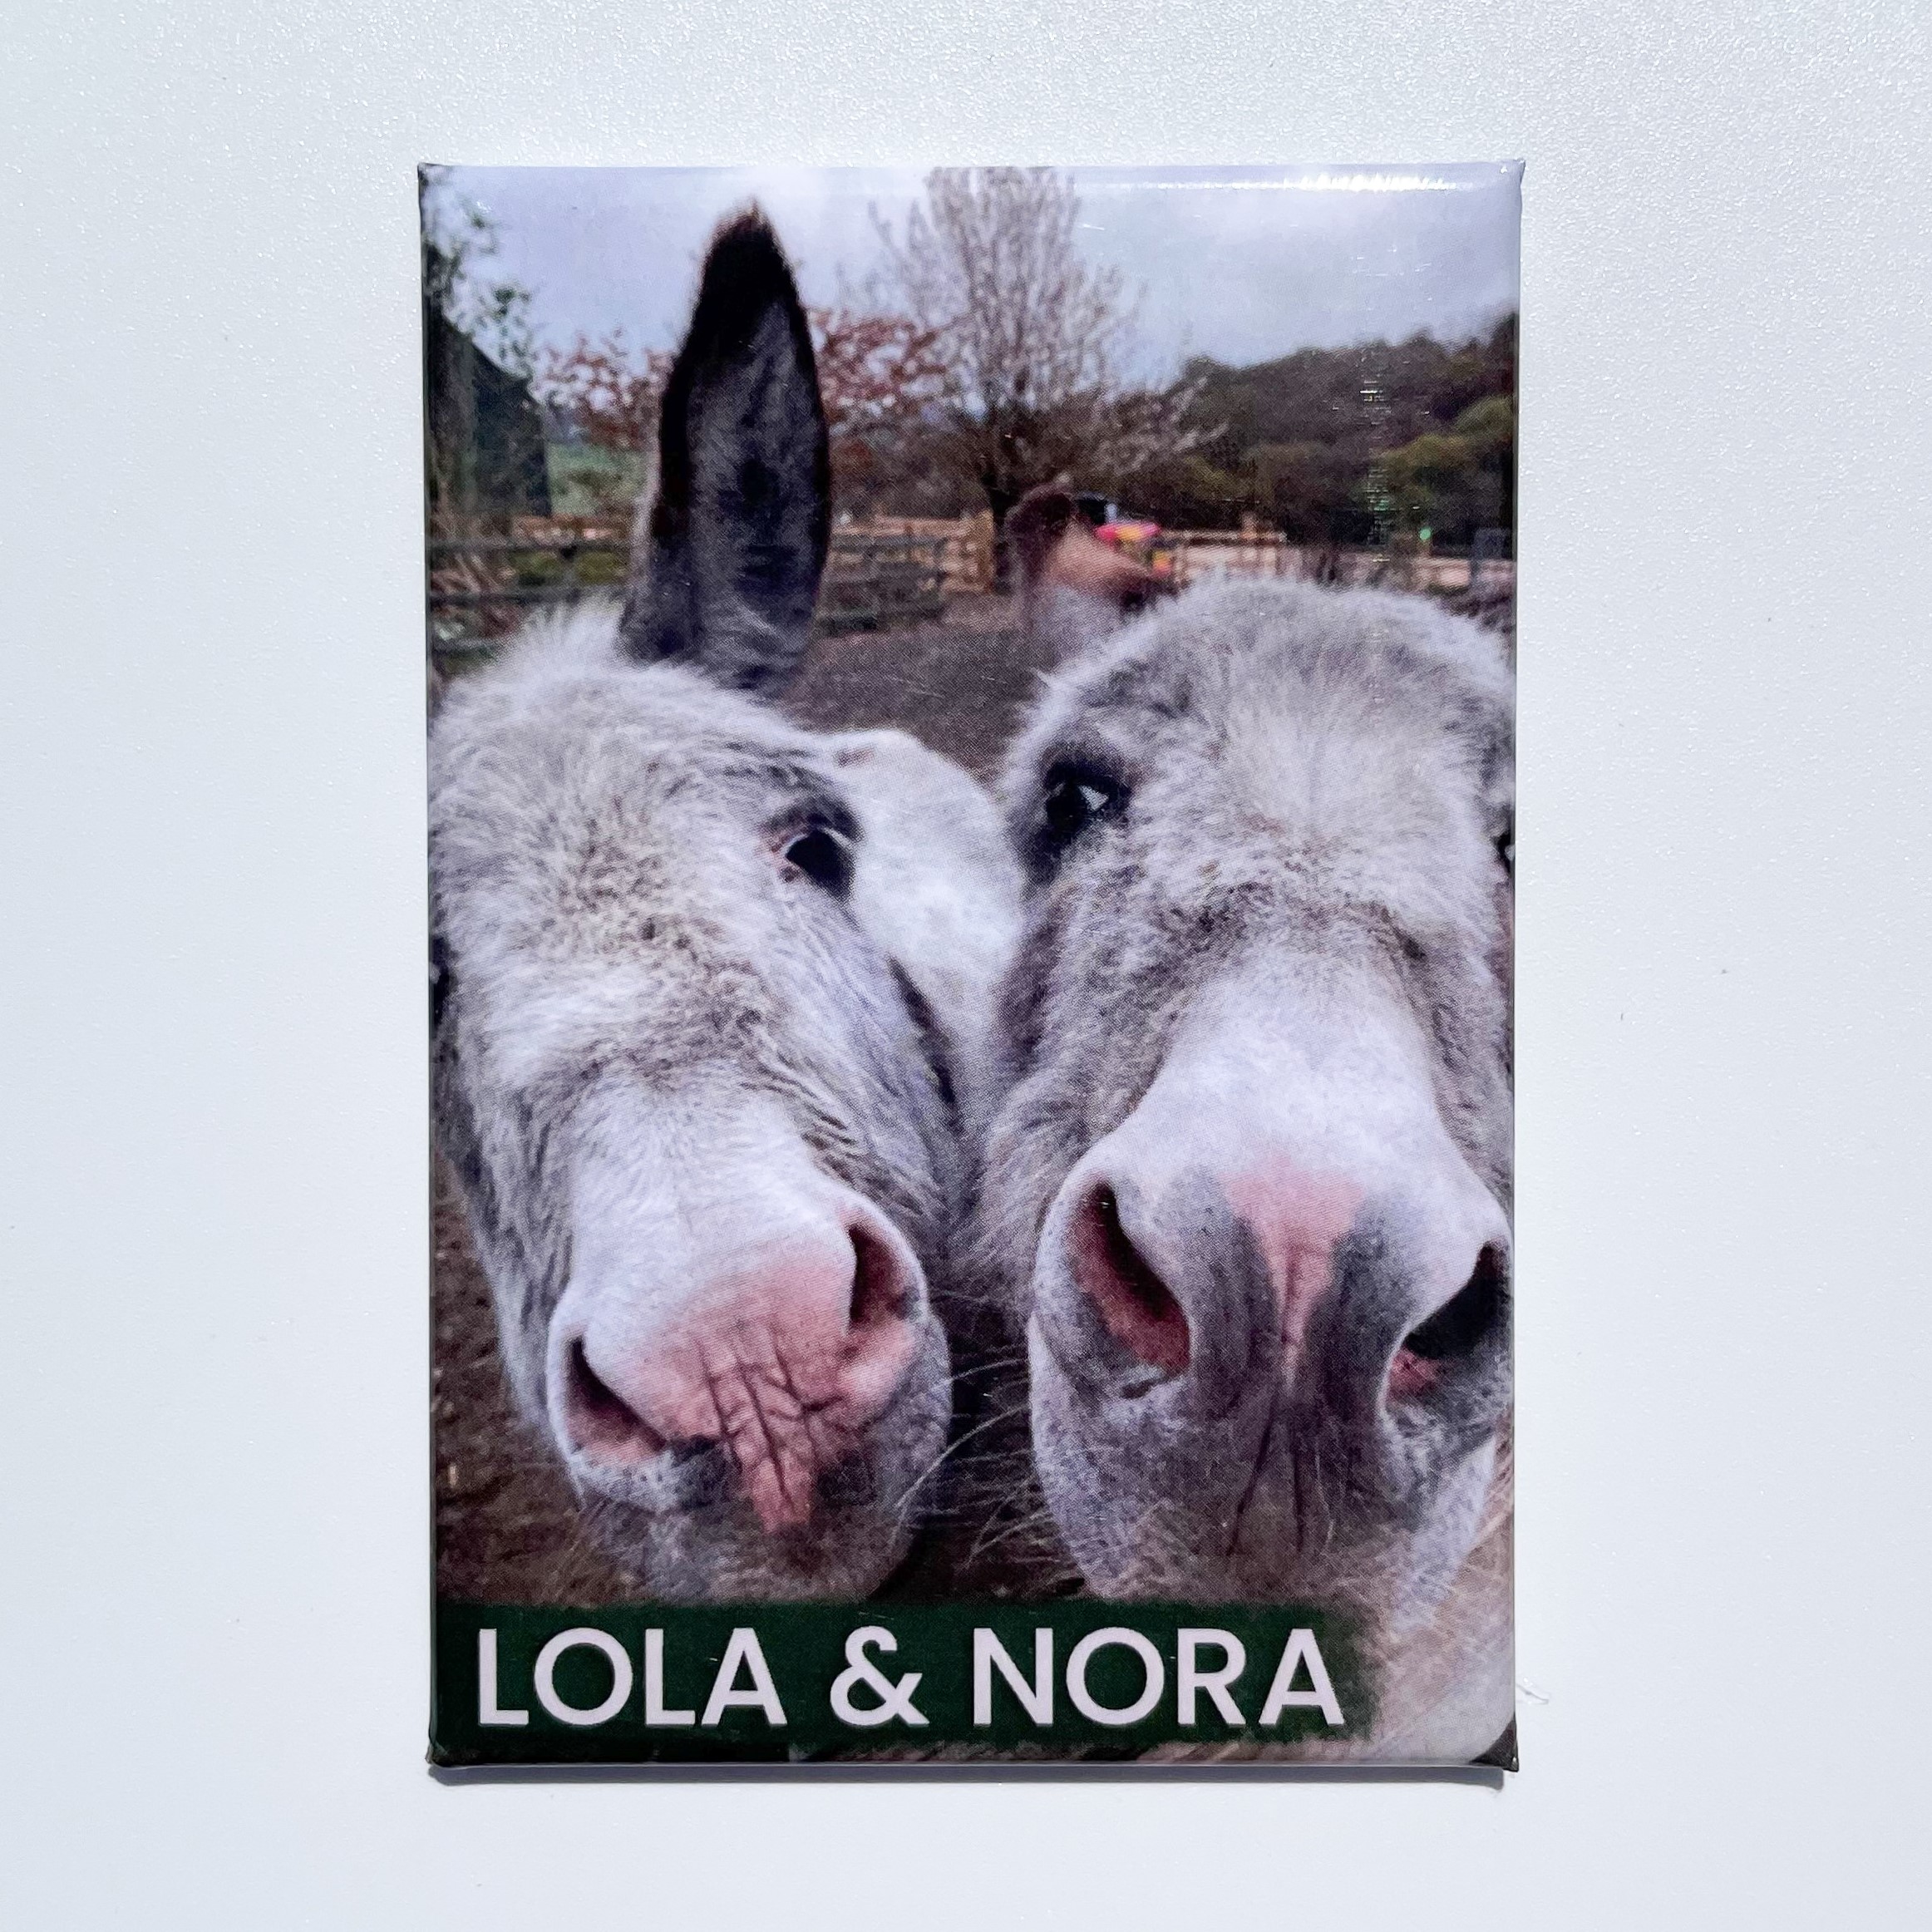 Lola & Nora